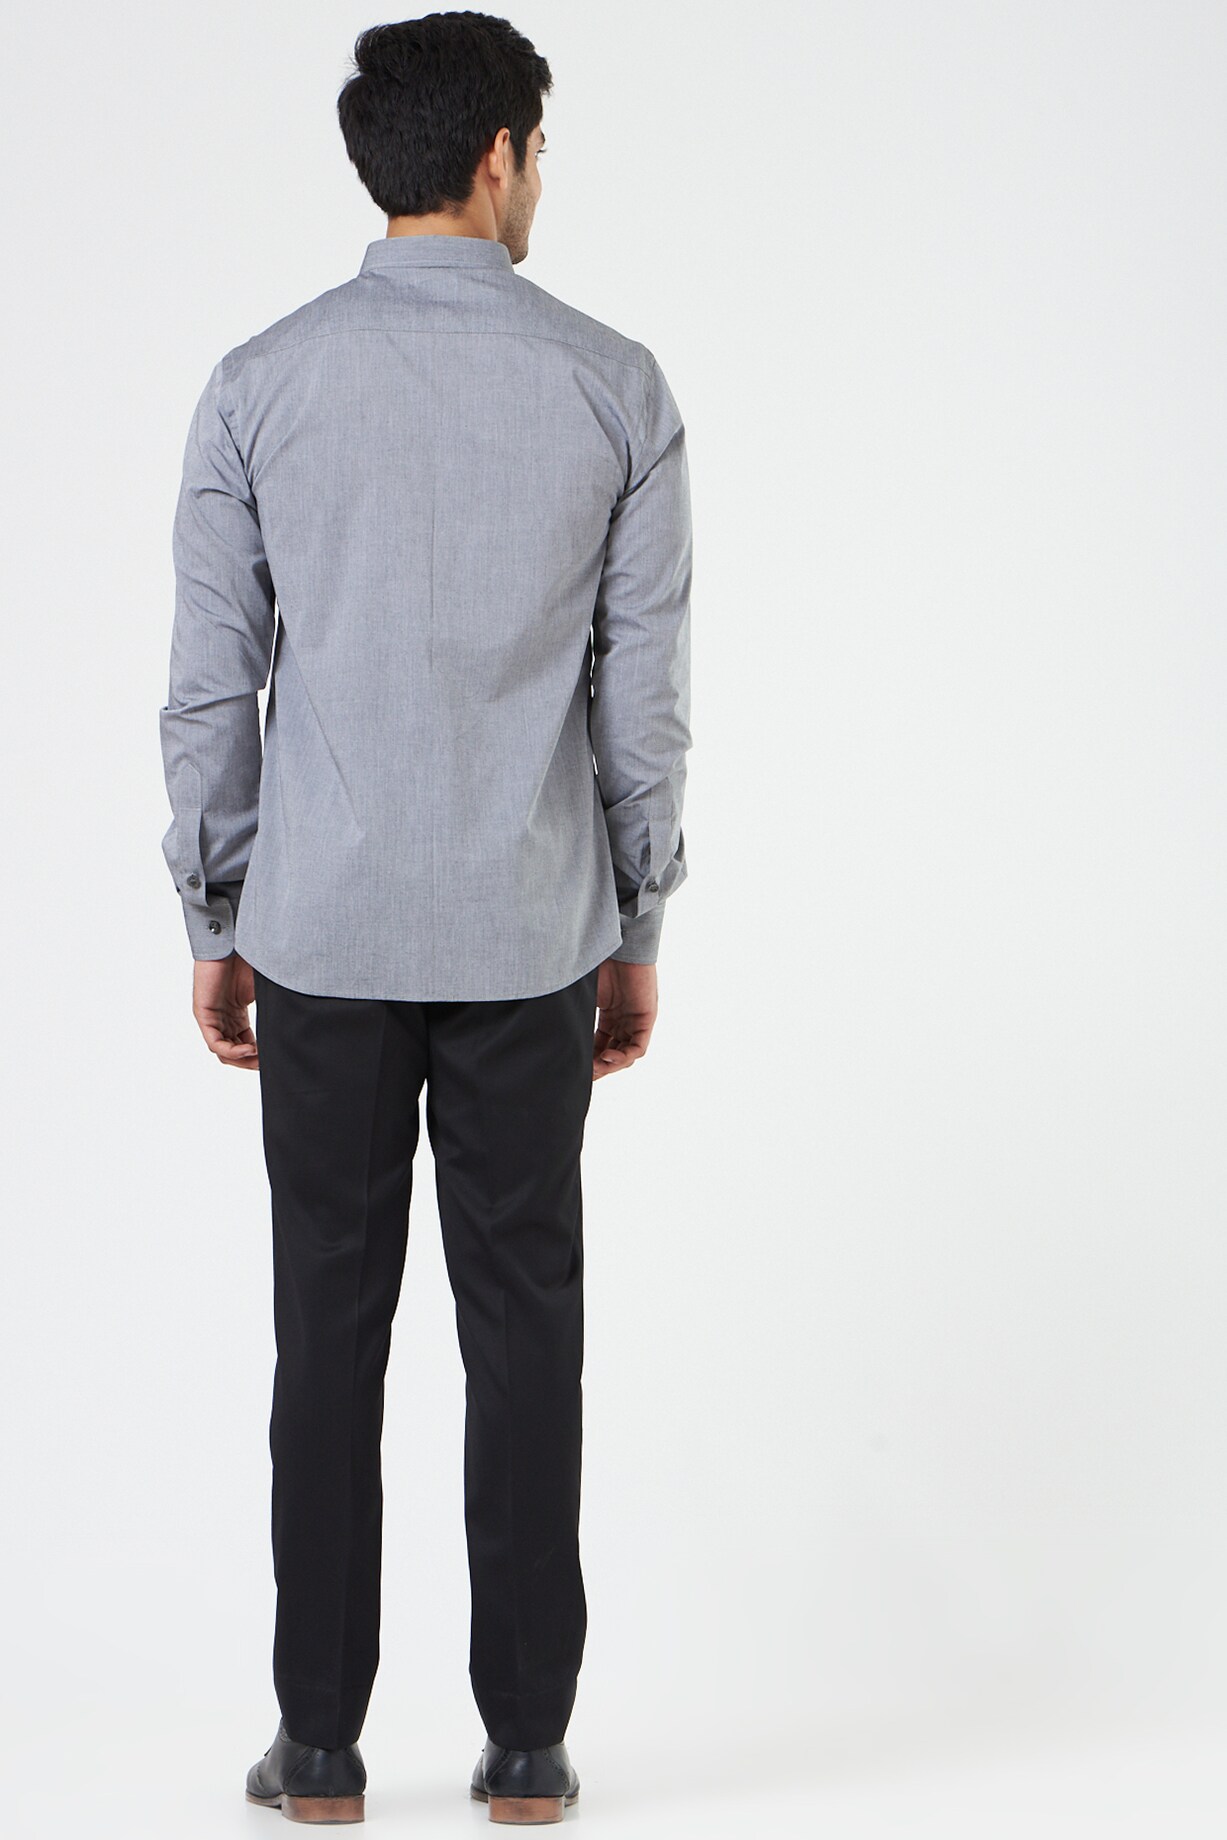 Light Grey Cotton Shirt by Design O Stitch Men